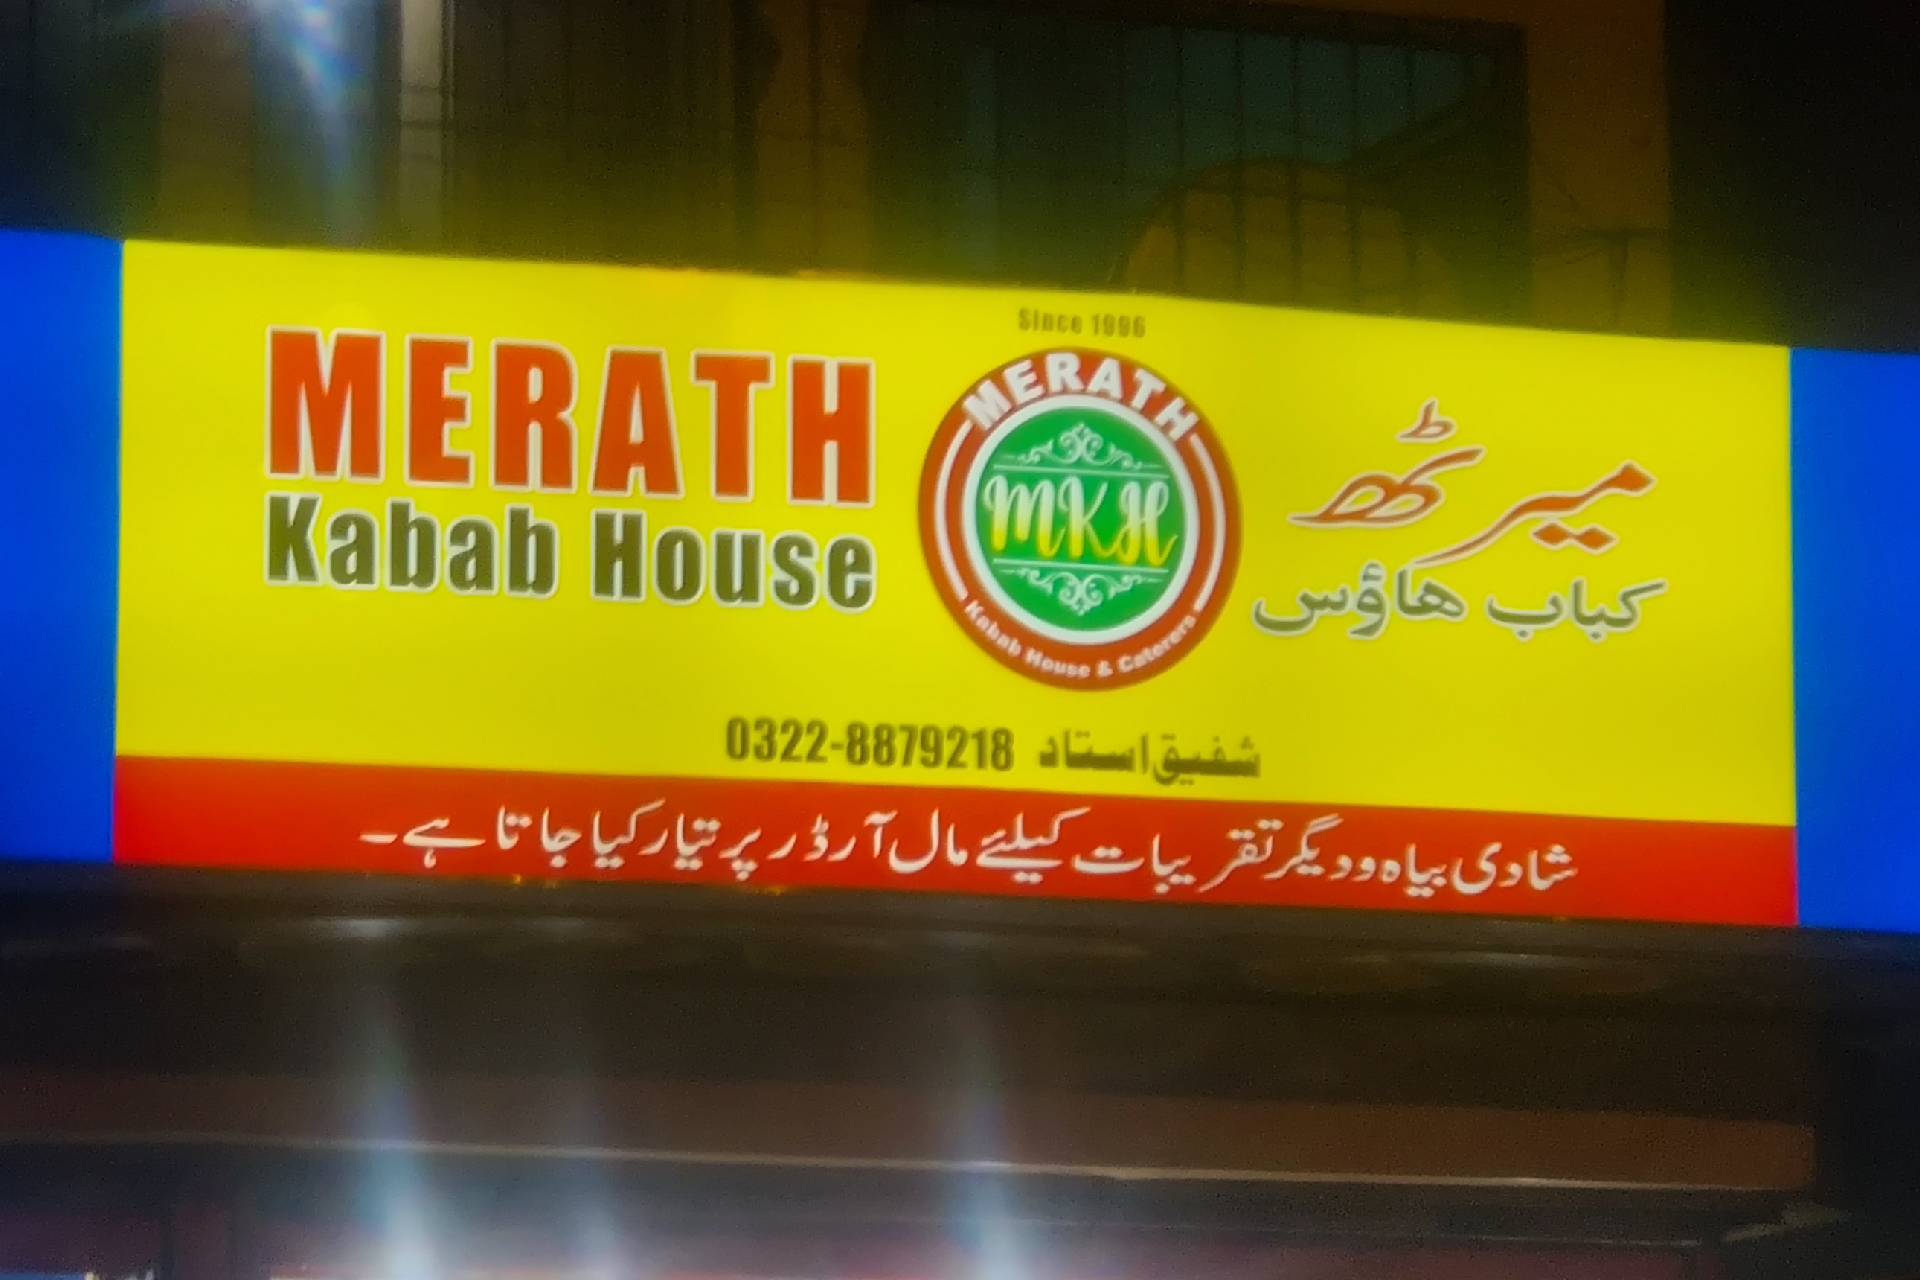 Meerath Kabab House Karachi